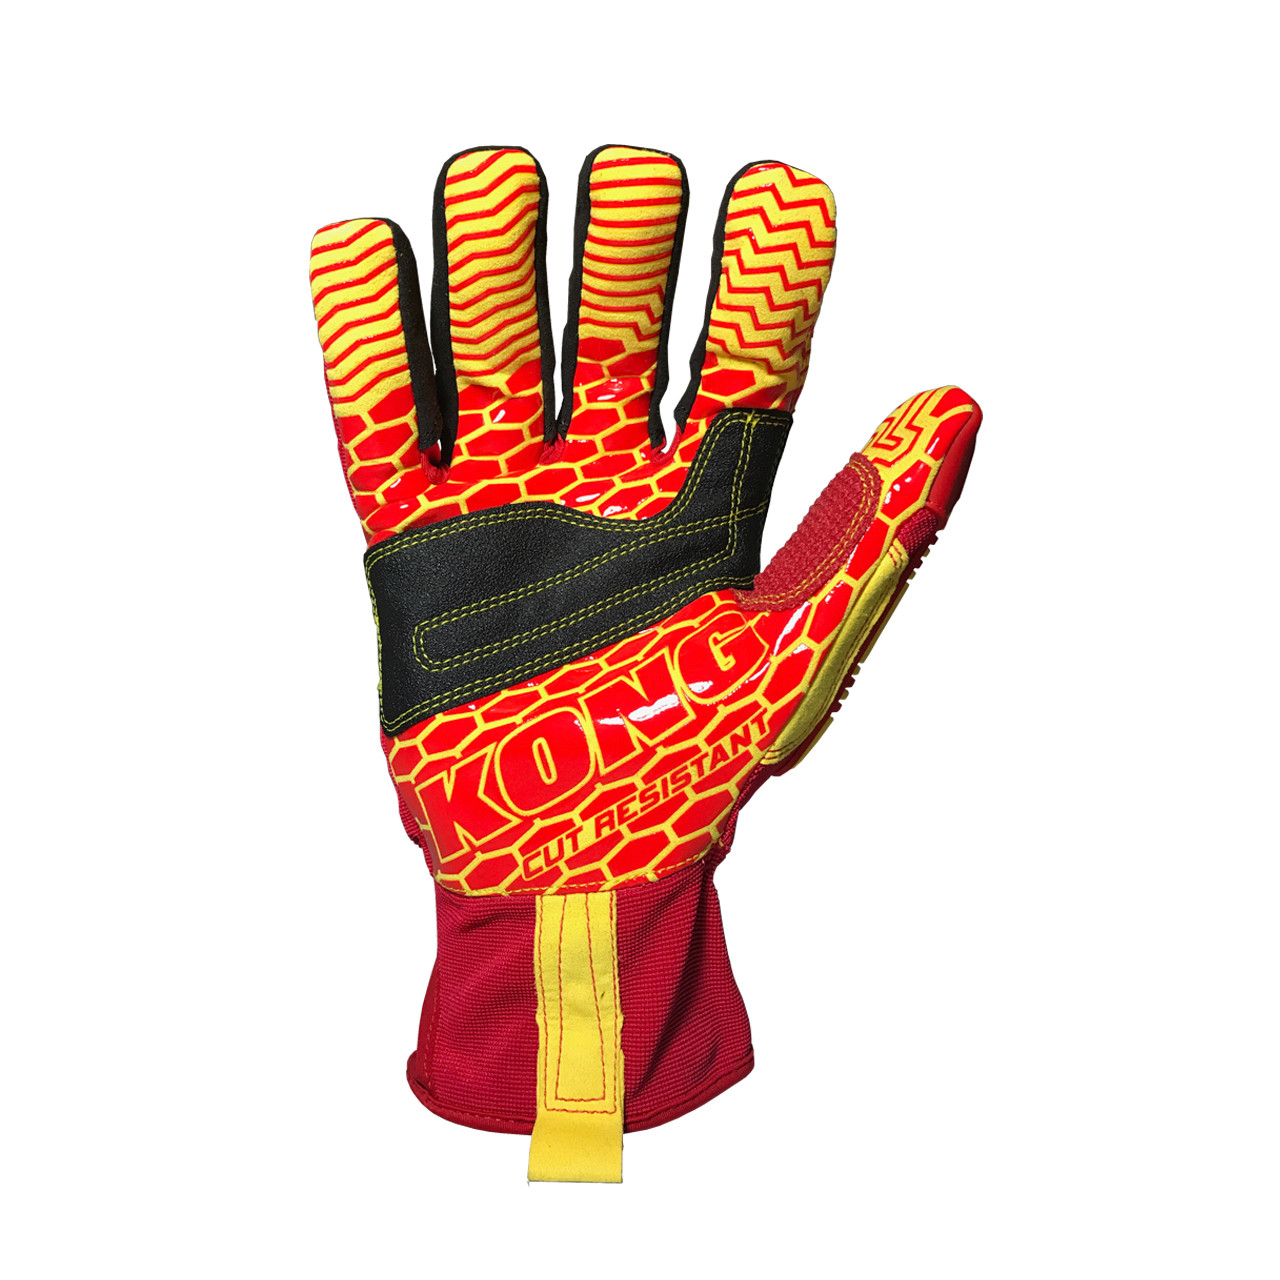 KONG Original Oil & Gas Safety Impact Gloves X-Large Orange NEW